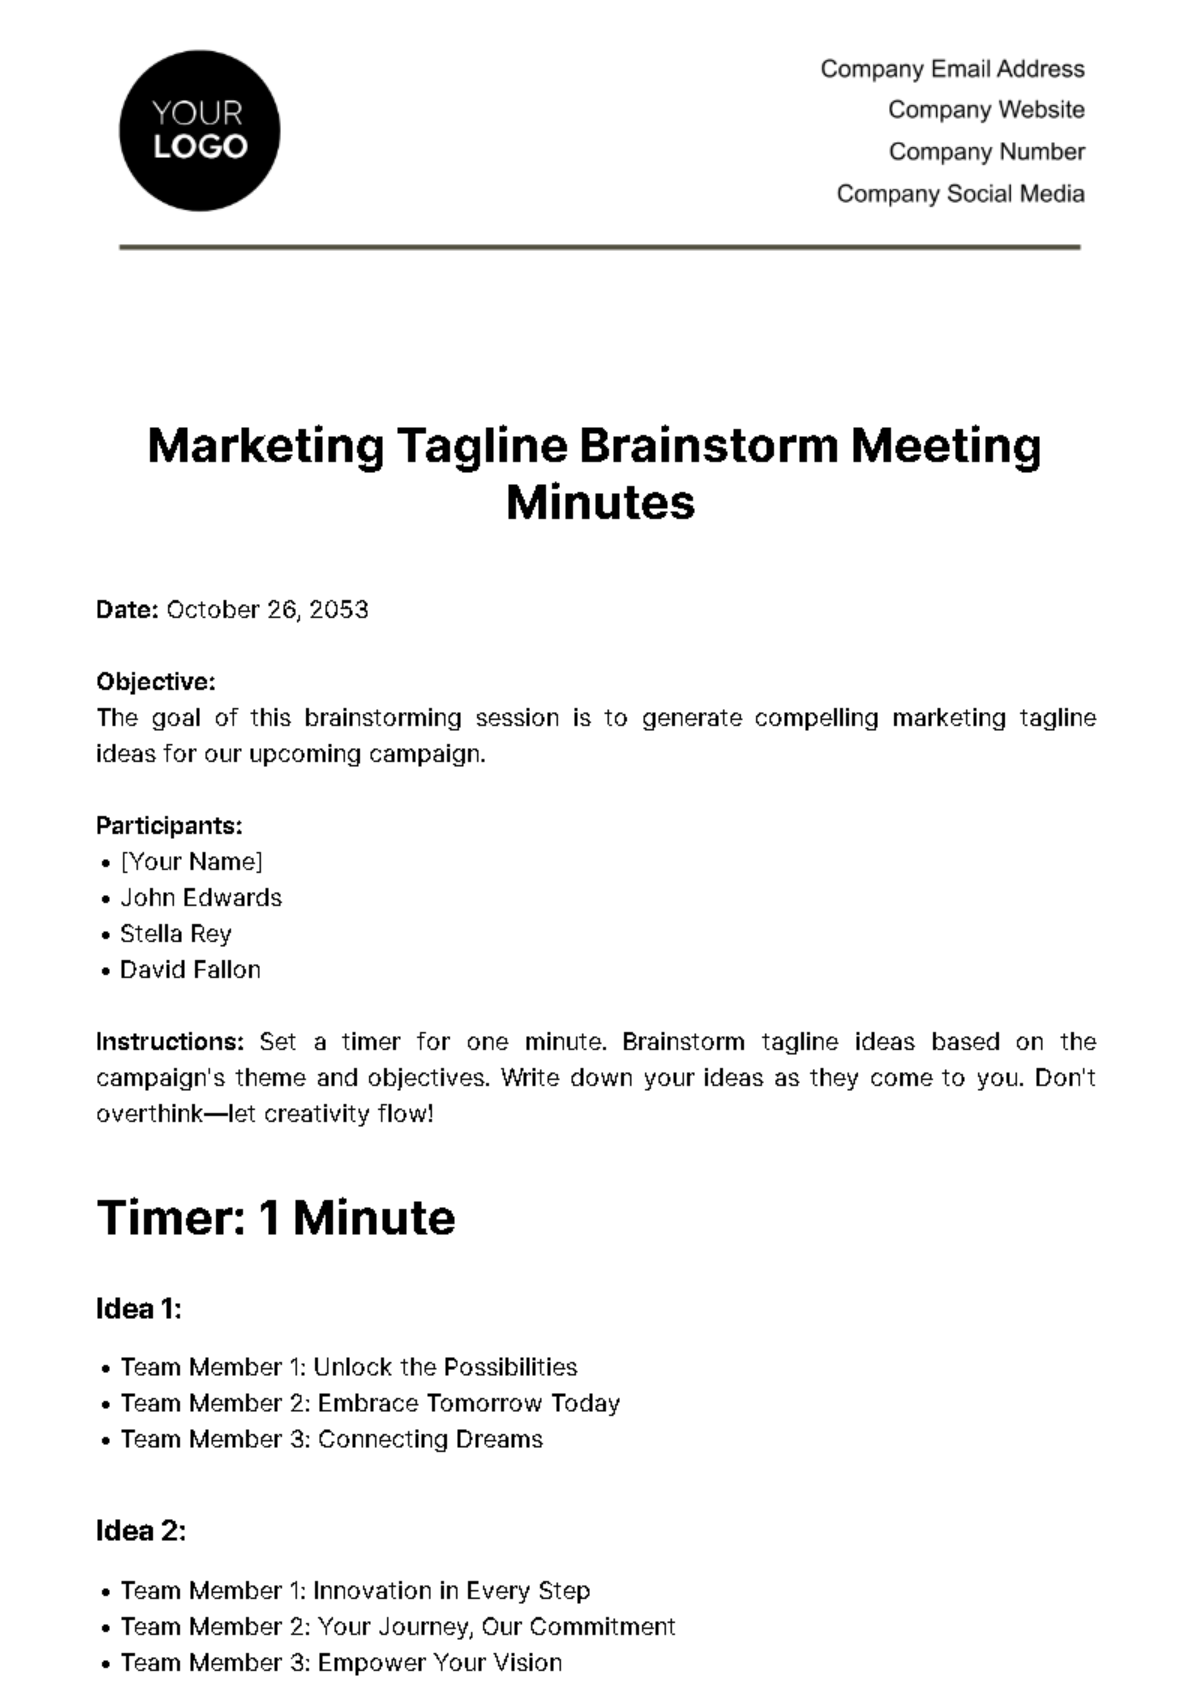 Marketing Tagline Brainstorm Minute Template